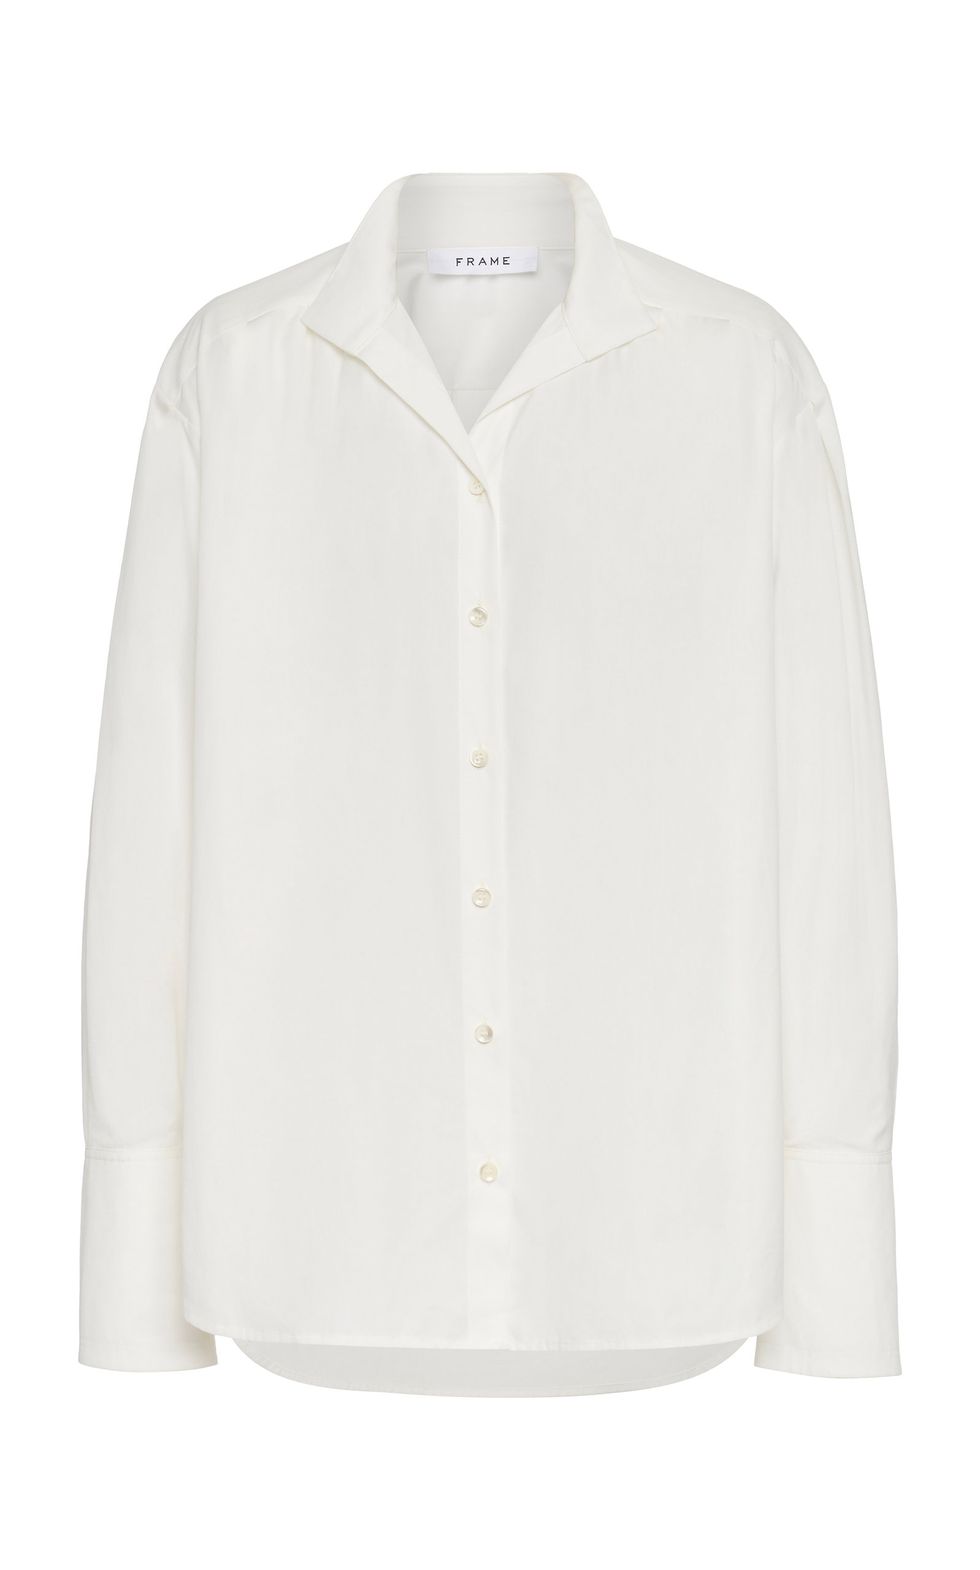 Best White Button Down Shirts for Women - White Button Downs Women